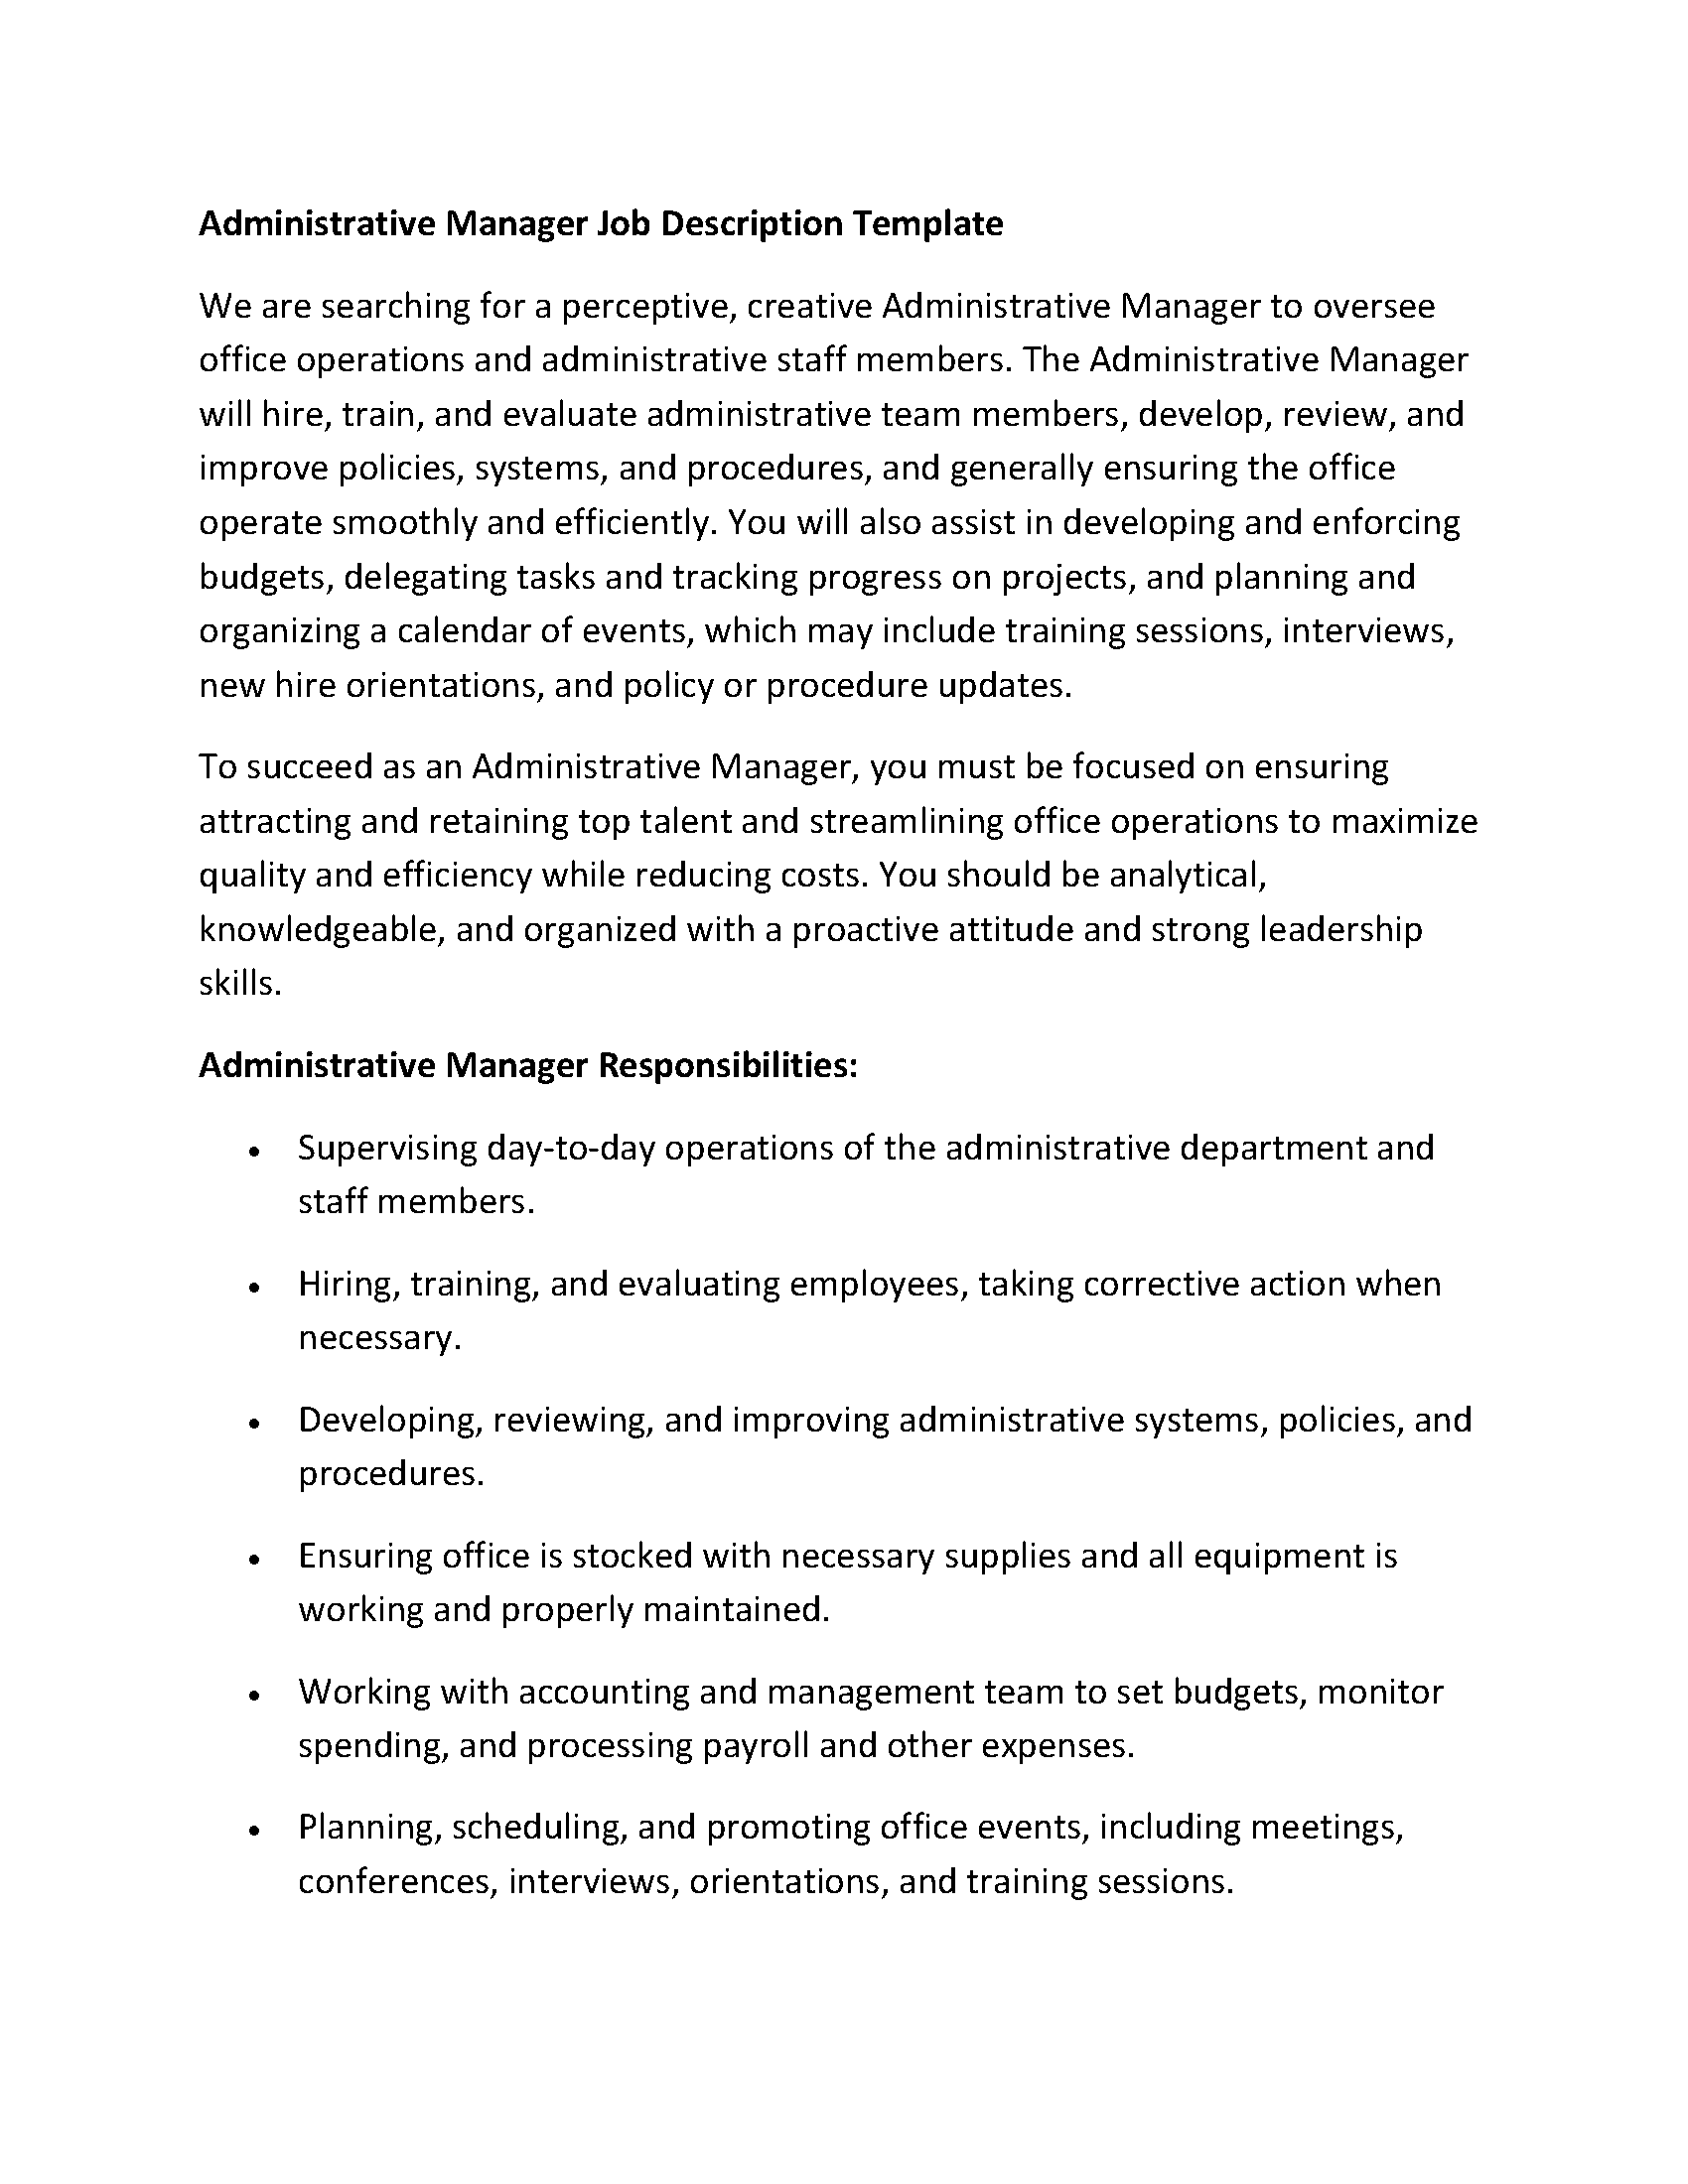 Administrative Manager Job Description Template